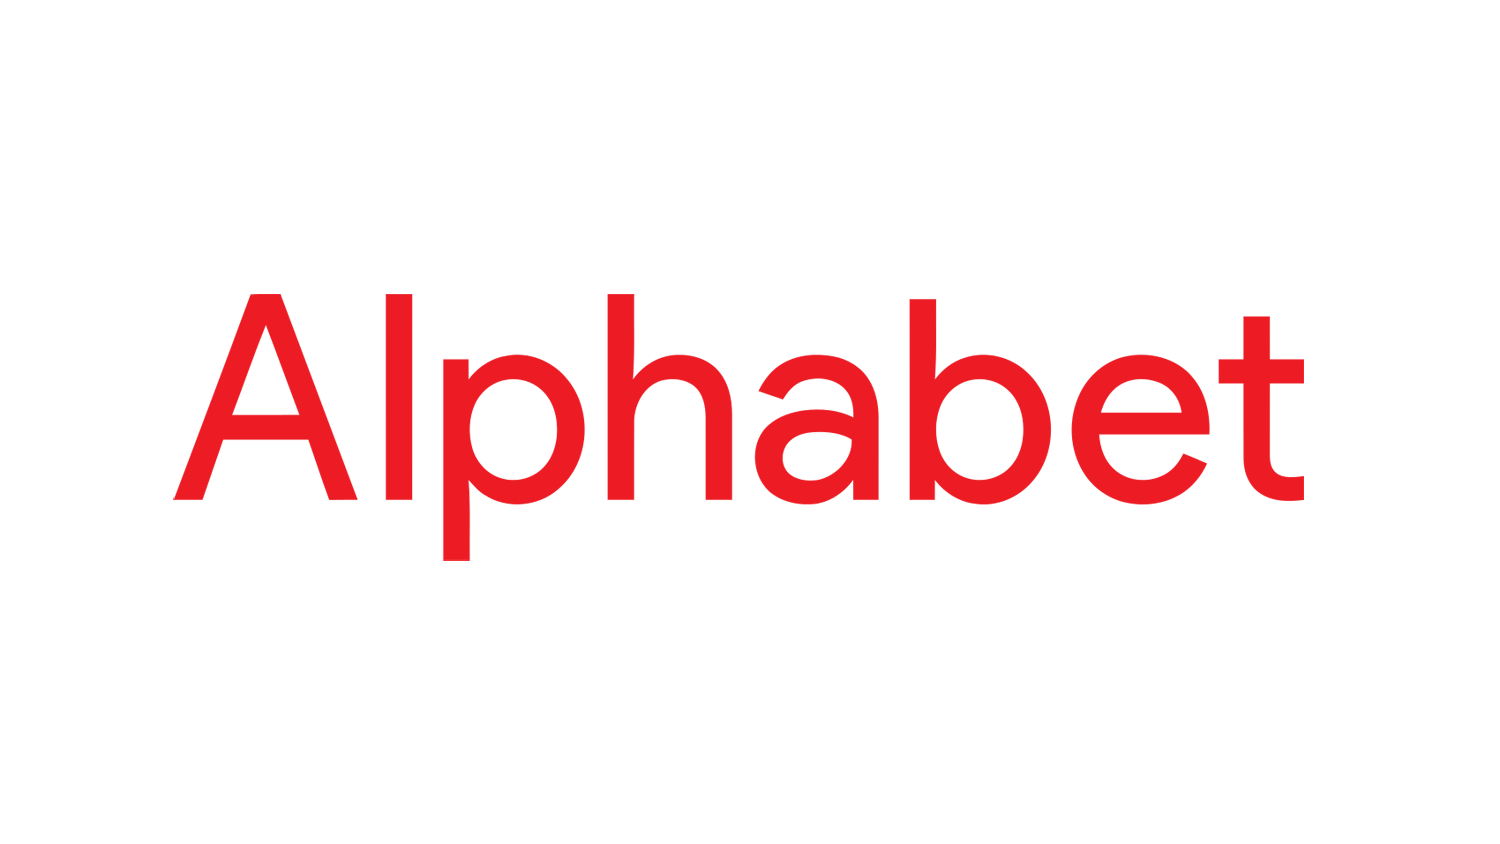 google alphabet graphic